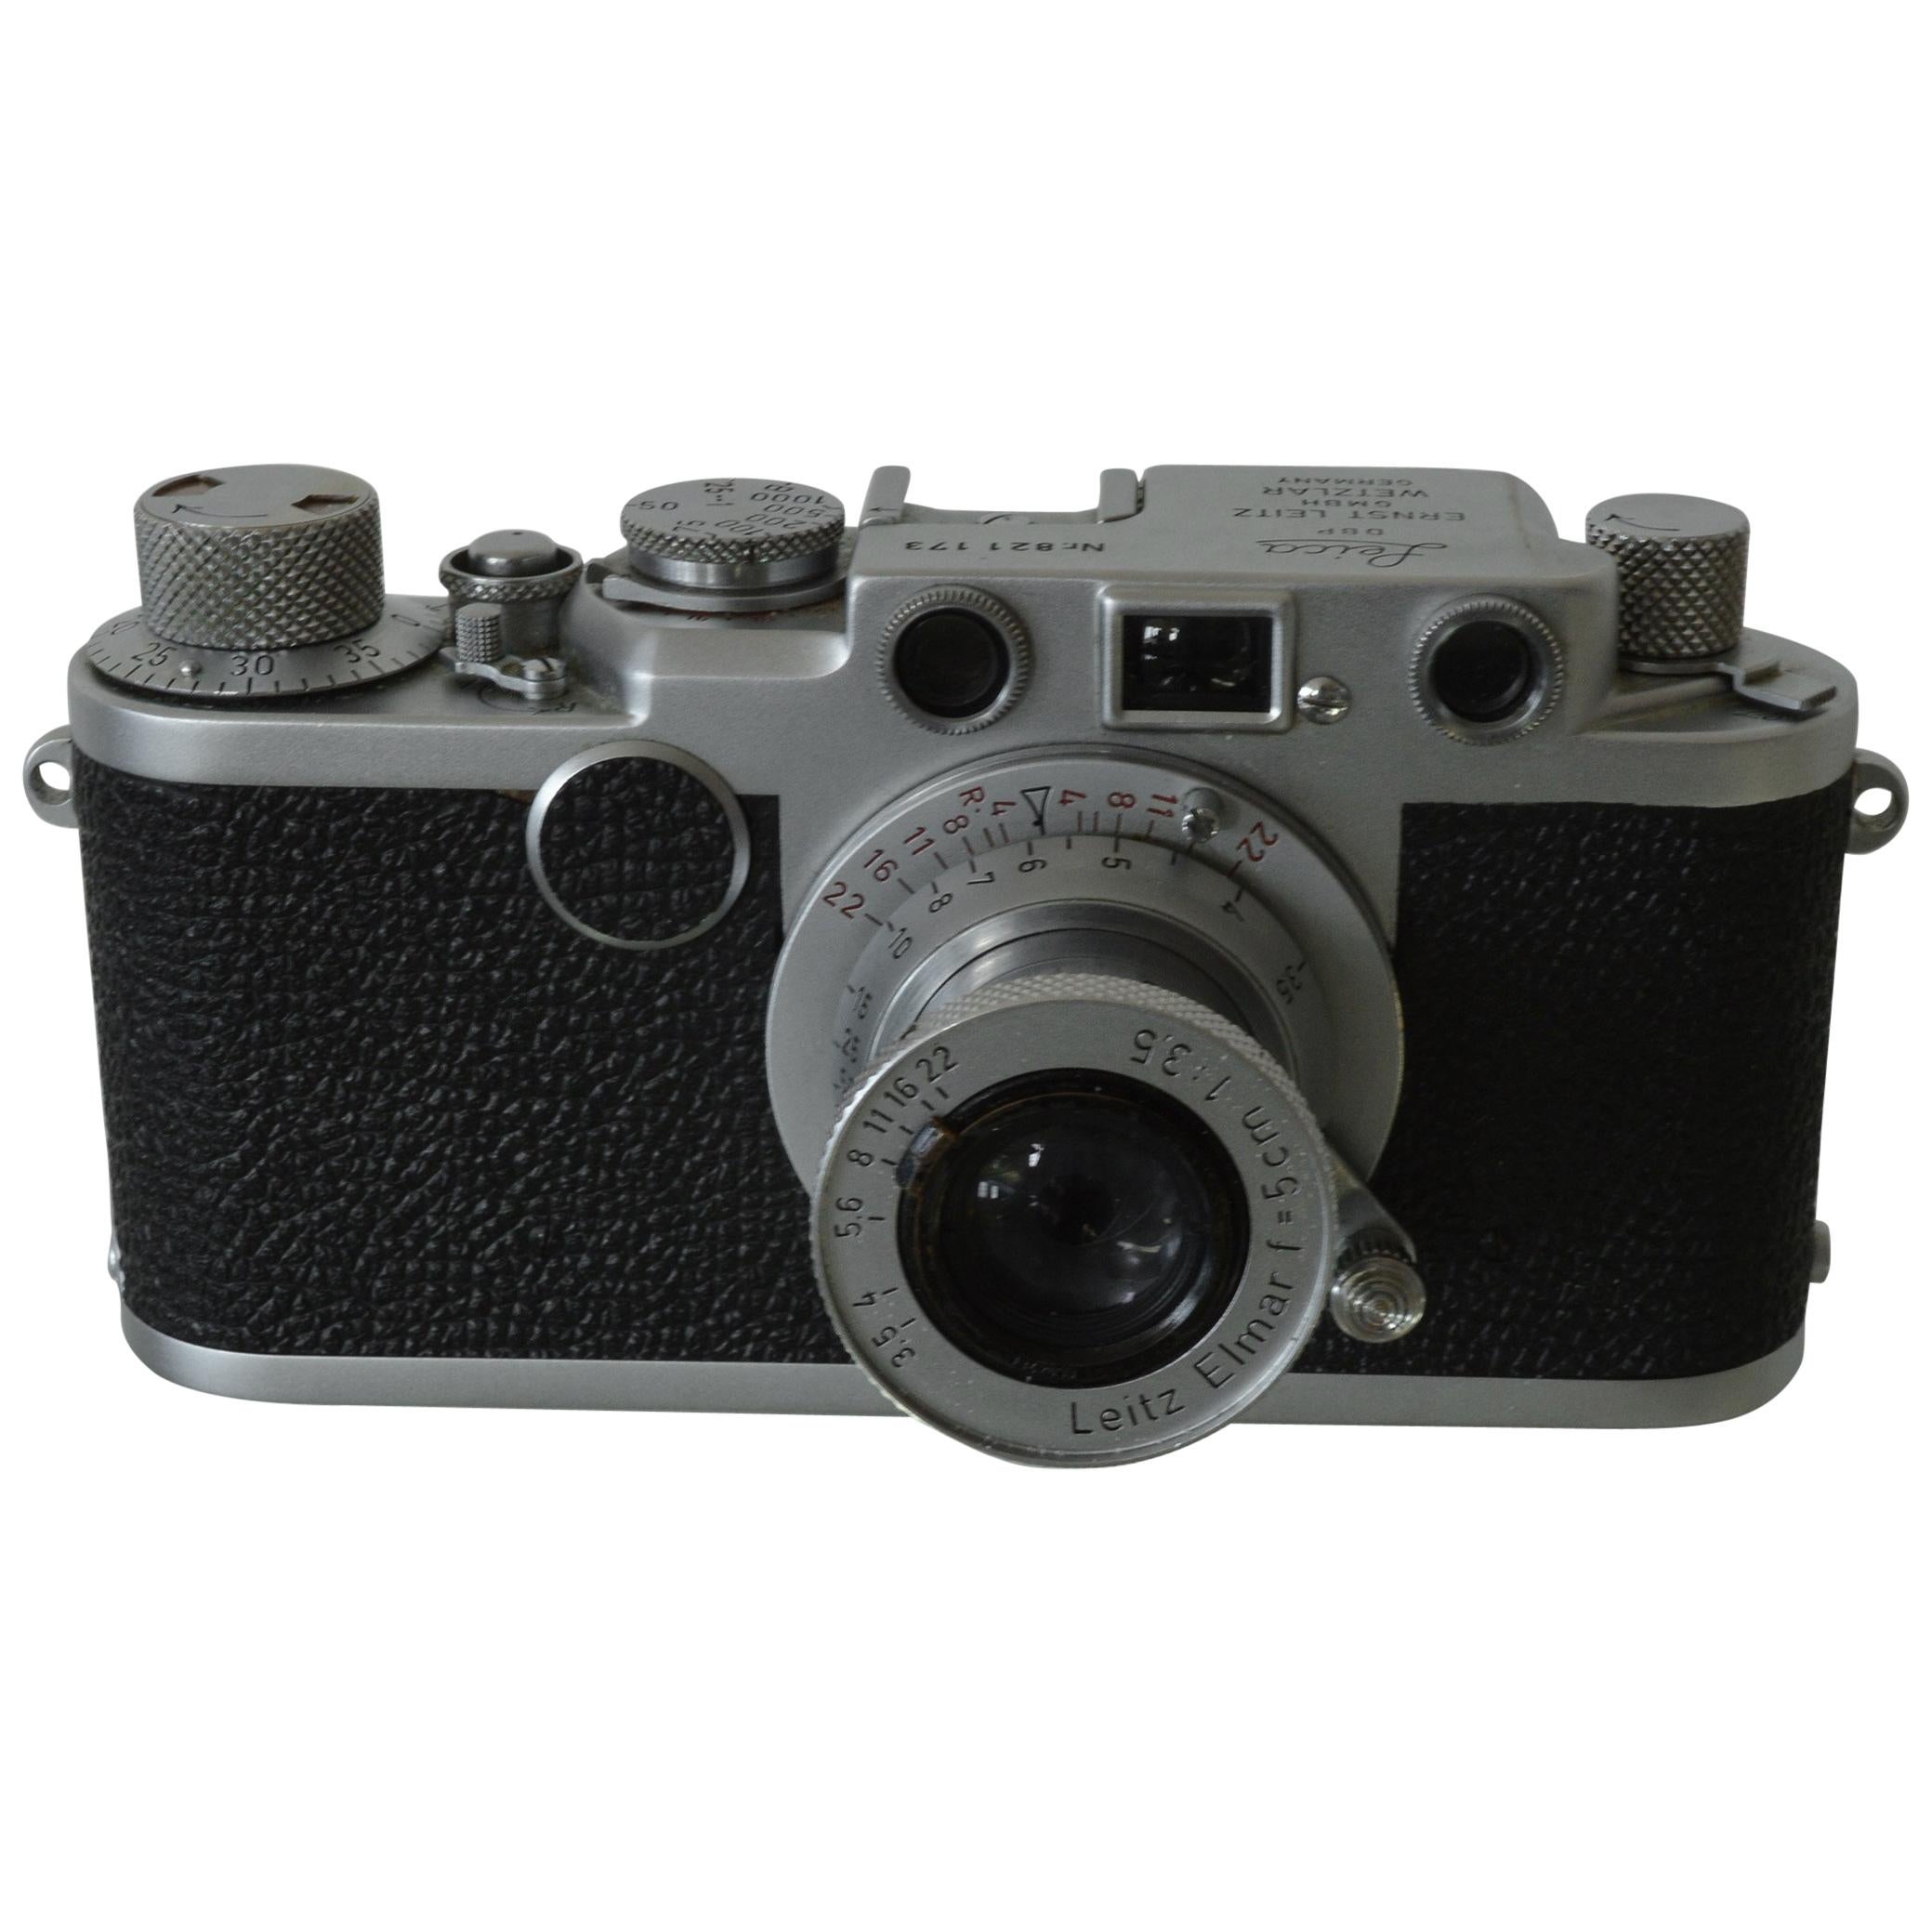 Vintage Leica 35mm Camera, 1950s